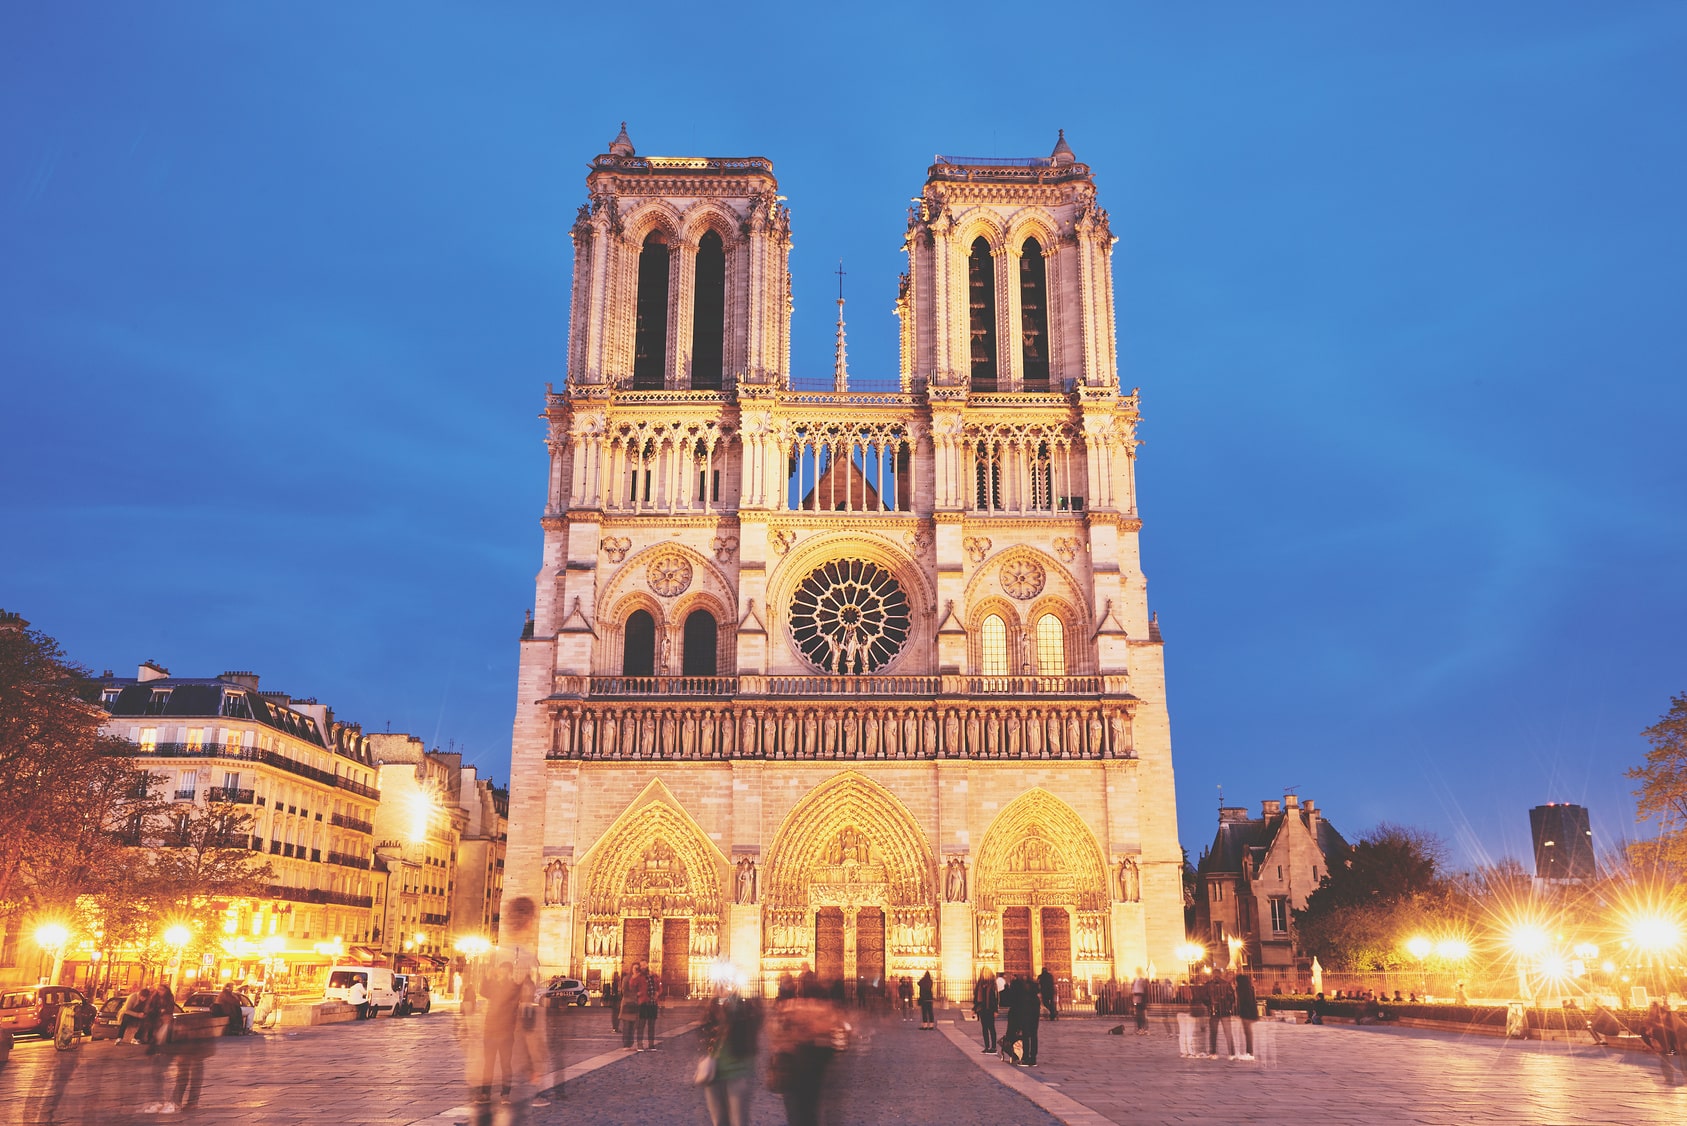 Archivfoto der Kathedrale Notre Dame in Paris. (Foto: Fotolia/badahos)